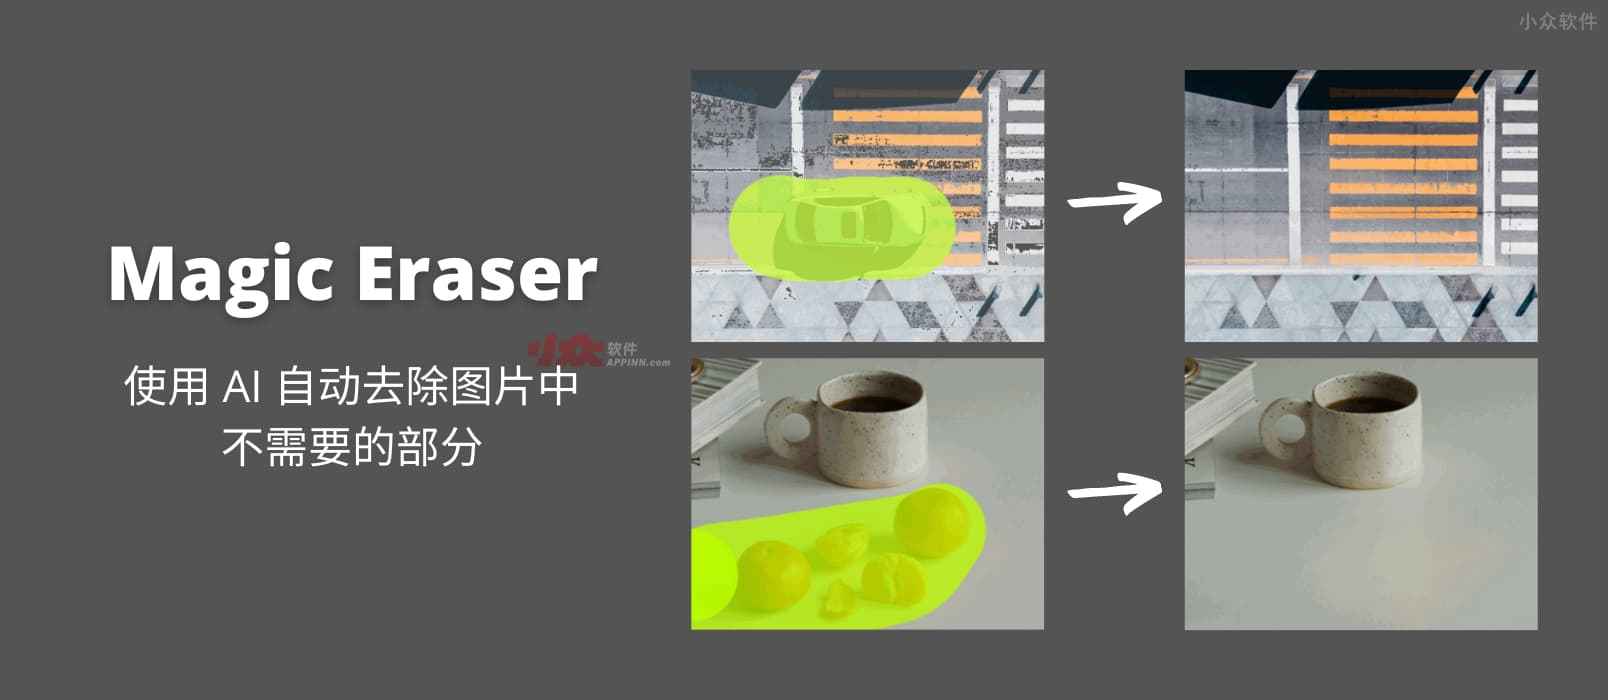 Magic Eraser - 使用 AI 自动去除图片中不需要的部分